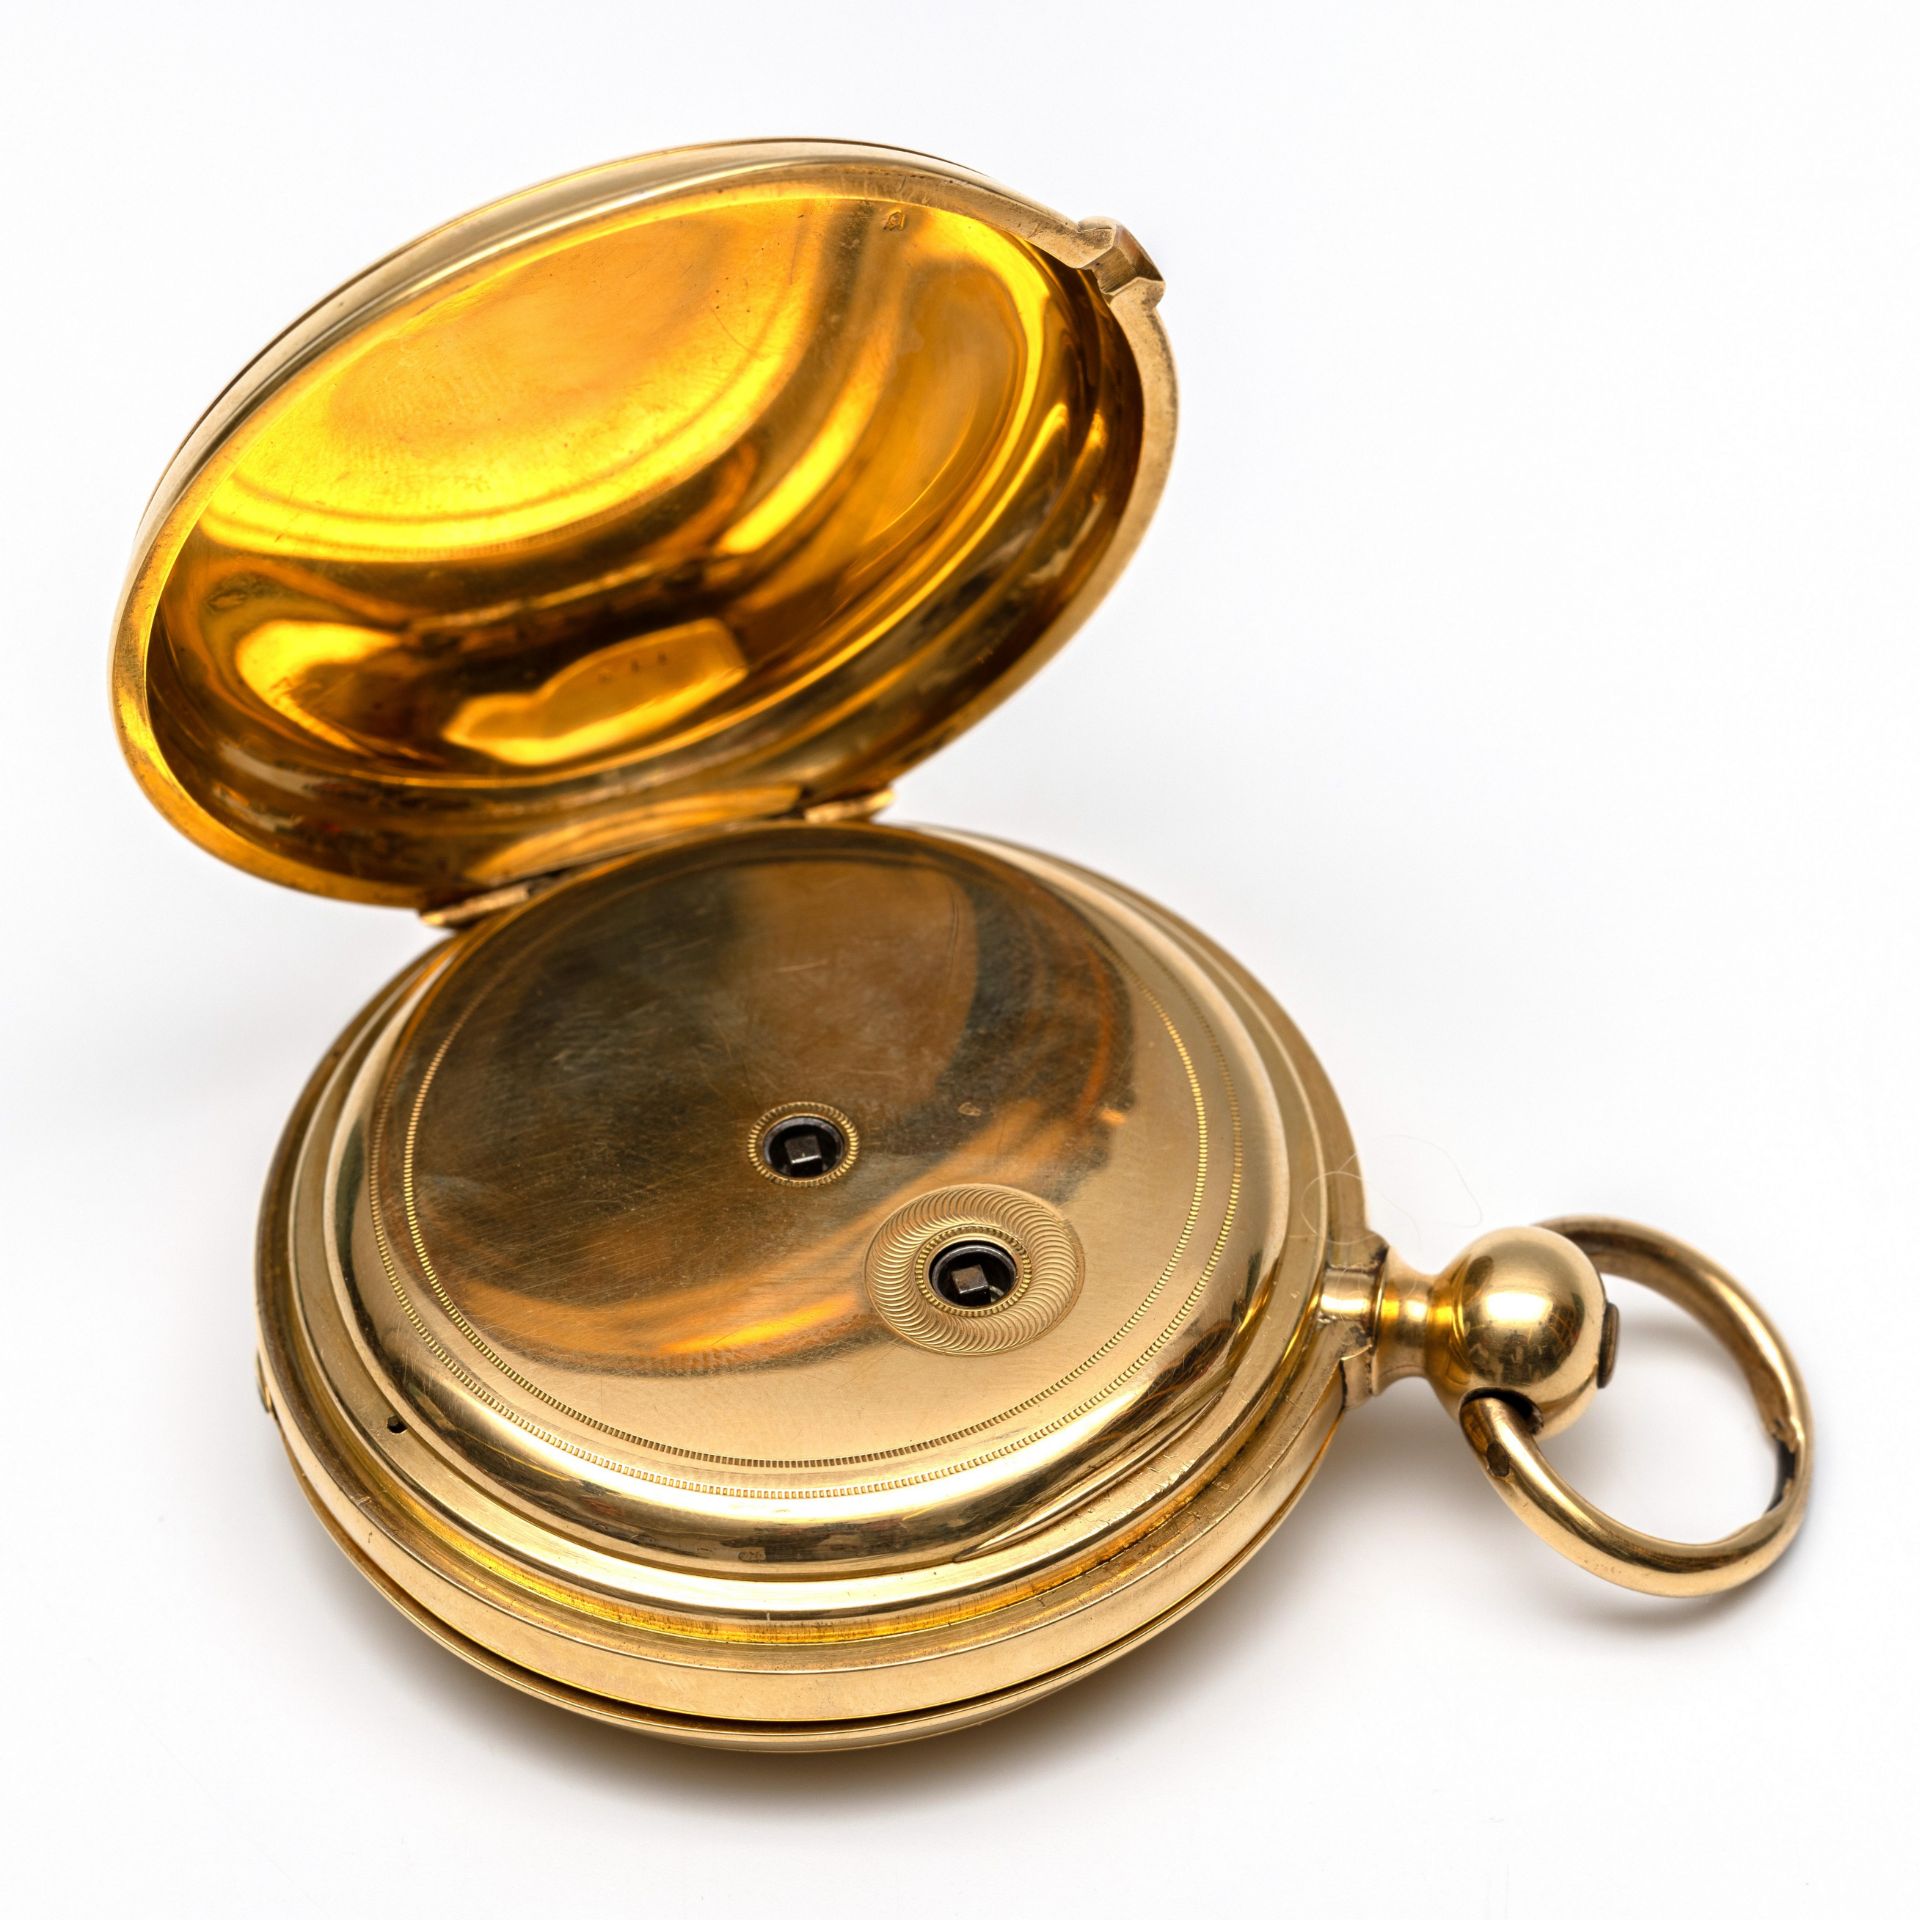 Frankrijk, mogelijk Henry Delolme, 18 kt. gouden chronometer zakhorloge met één-minuut tourbillon, c - Bild 3 aus 8